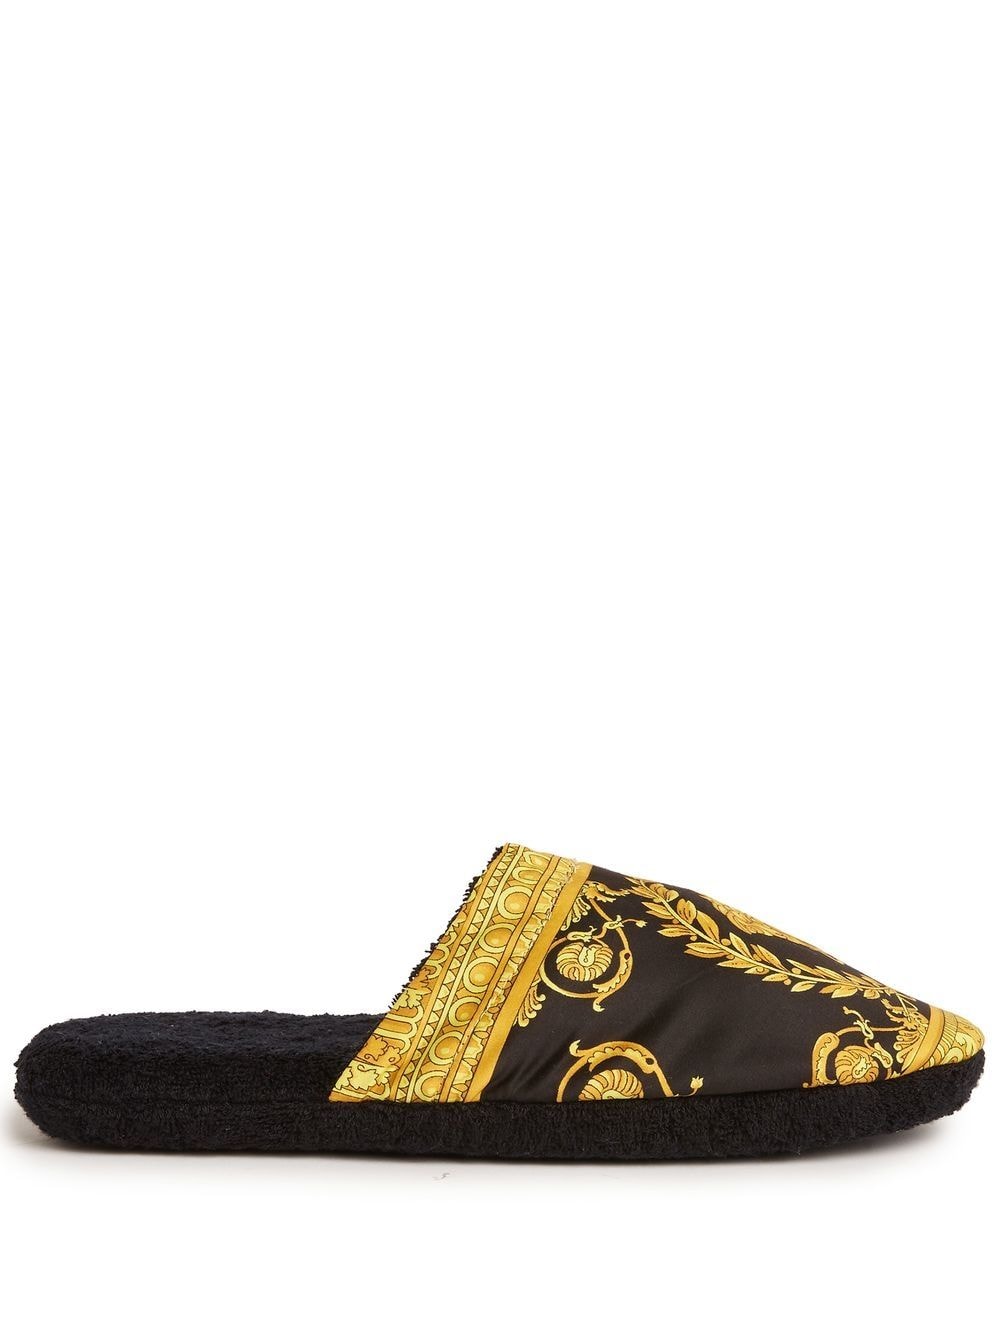 Versace I Love Baroque slippers - Black